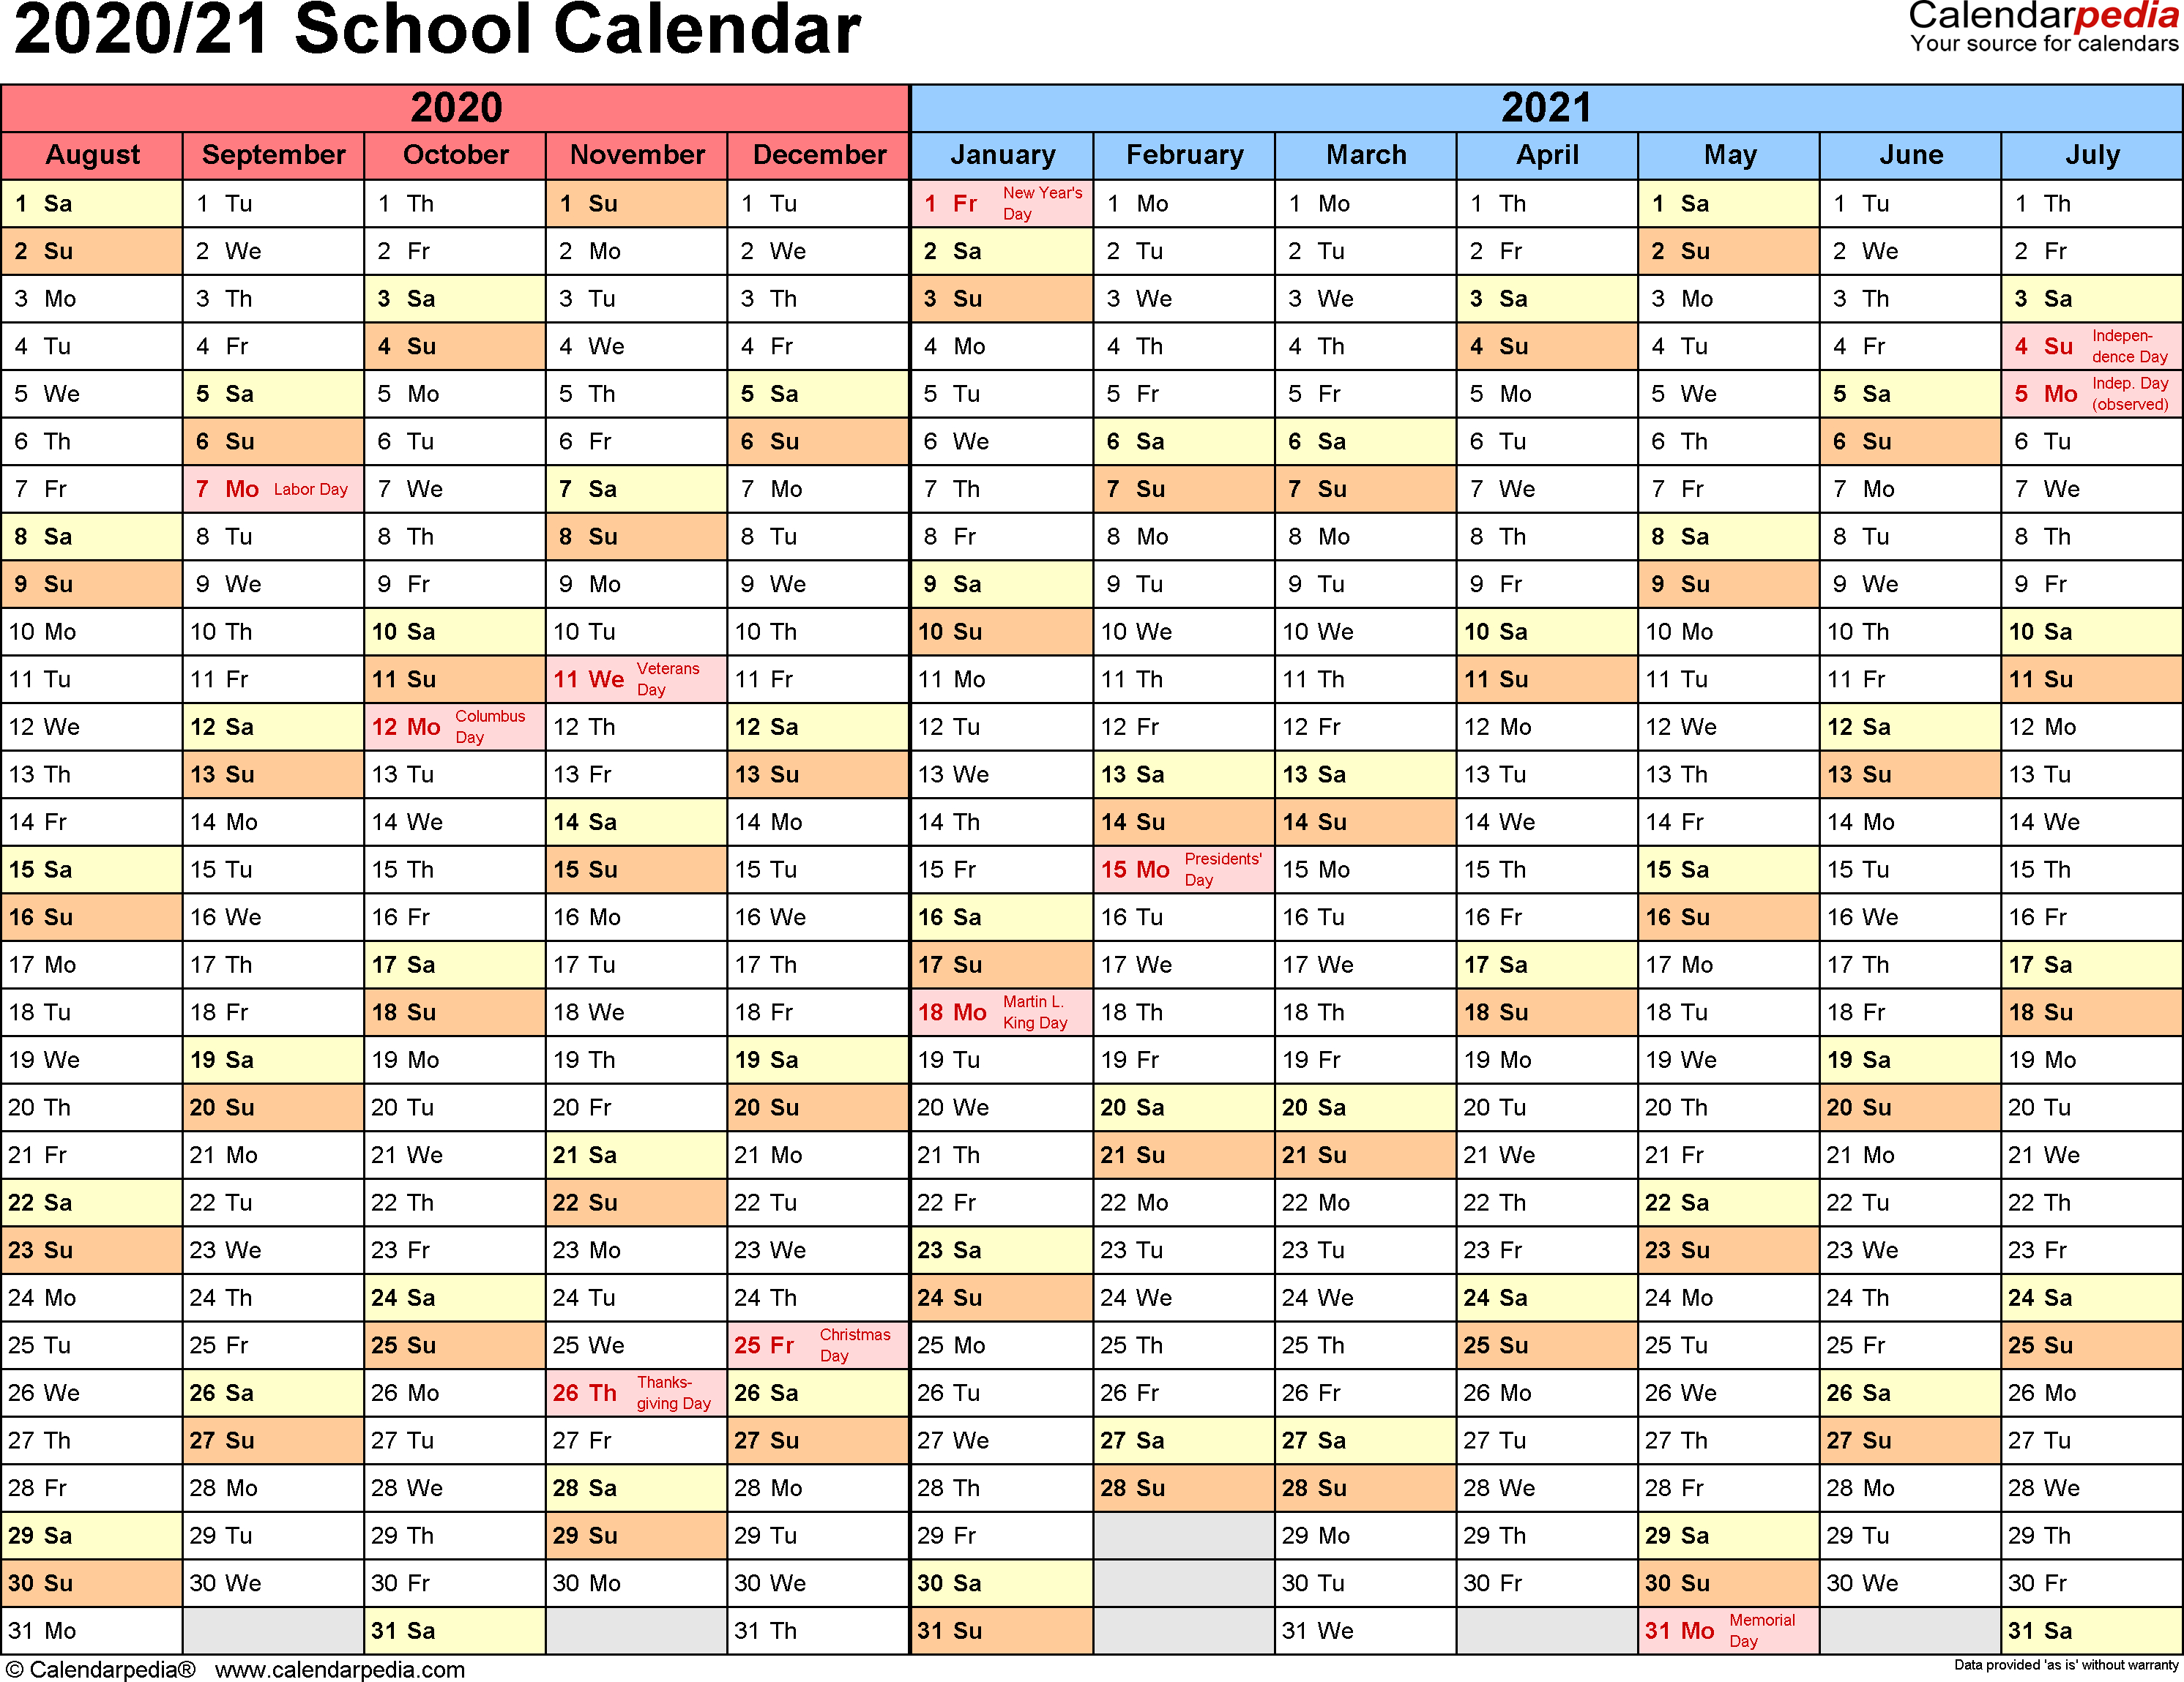 School Calendars 2020/2021 As Free Printable Word Templates